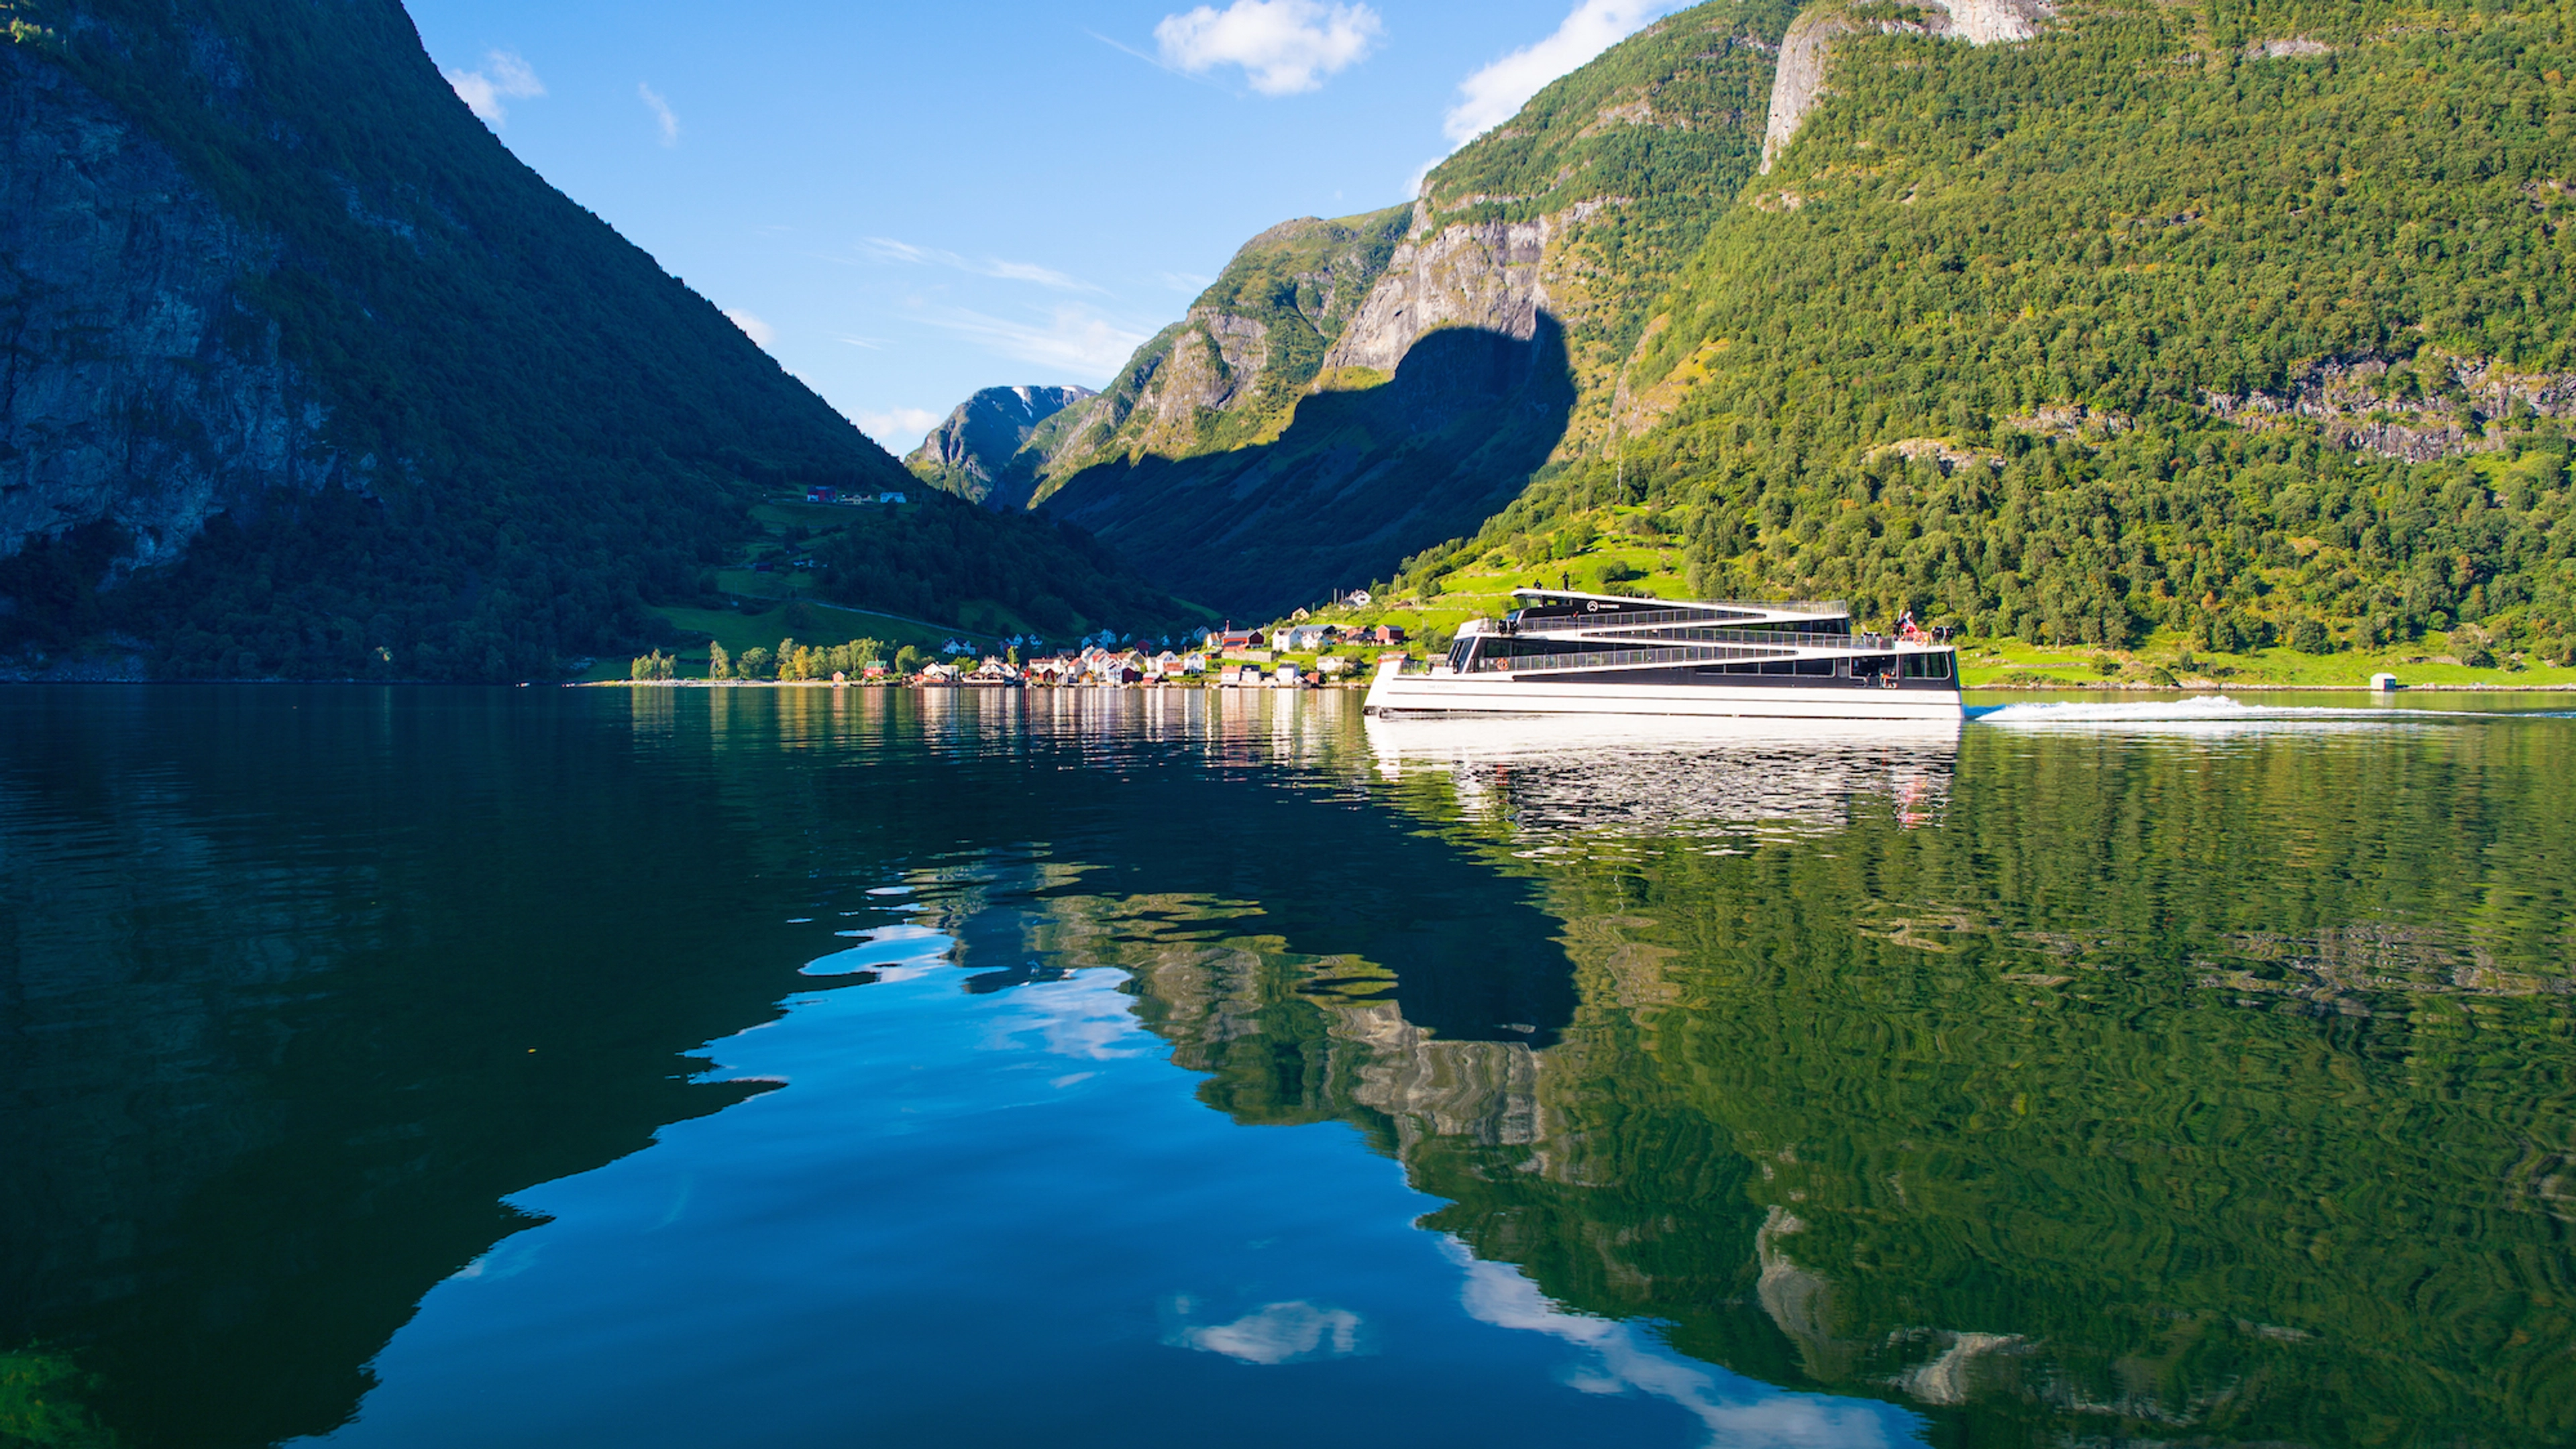 Fjord cruise on the Nærøyfjord from Flåm - Norway